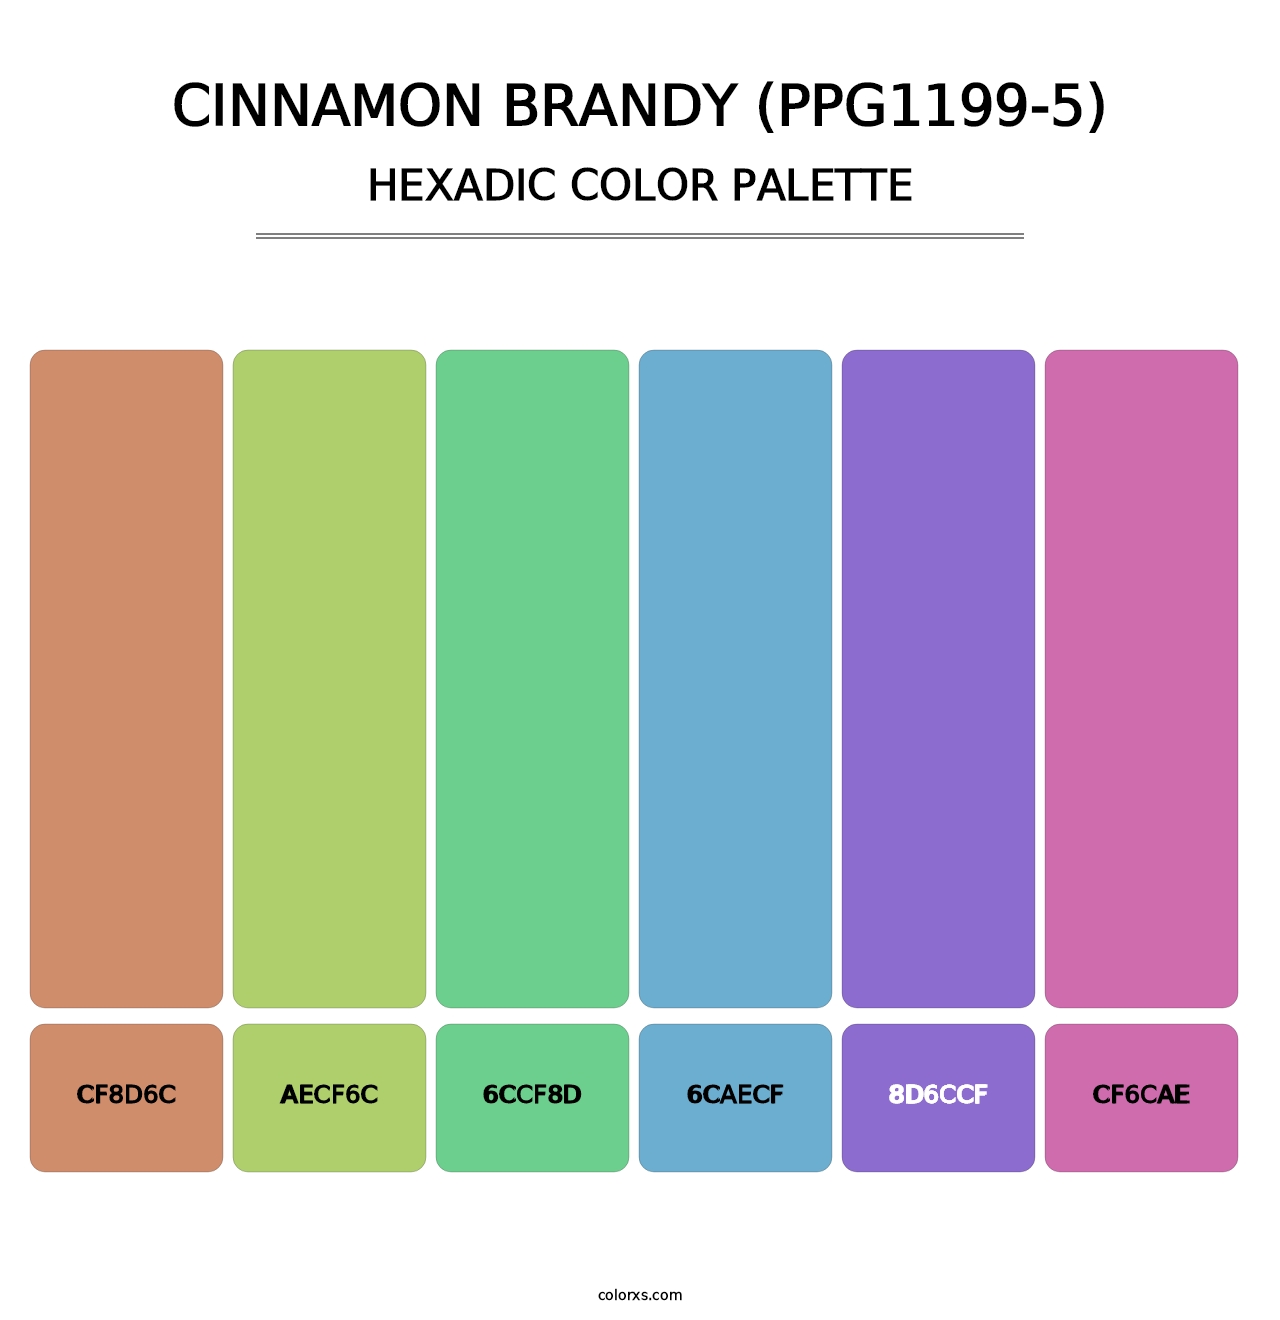 Cinnamon Brandy (PPG1199-5) - Hexadic Color Palette